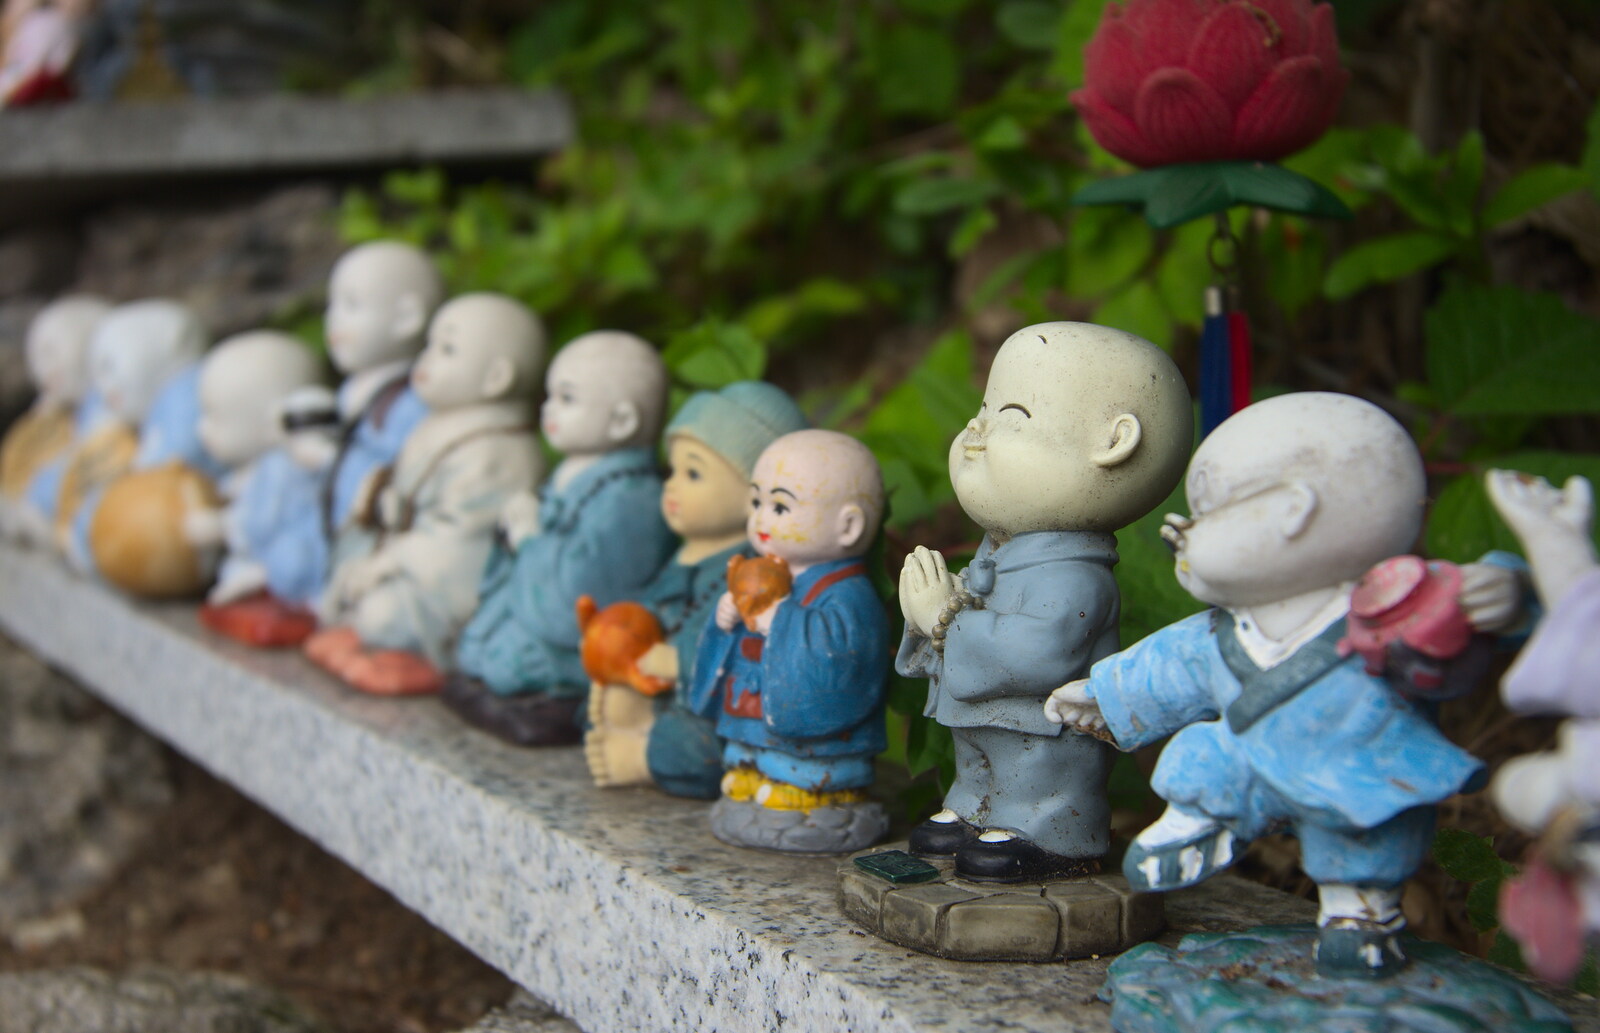 A row of praying Buddhas from Working at Samsung, and Geumosan Mountain, Gumi, Gyeongsangbuk-do, Korea - 24th June 2012